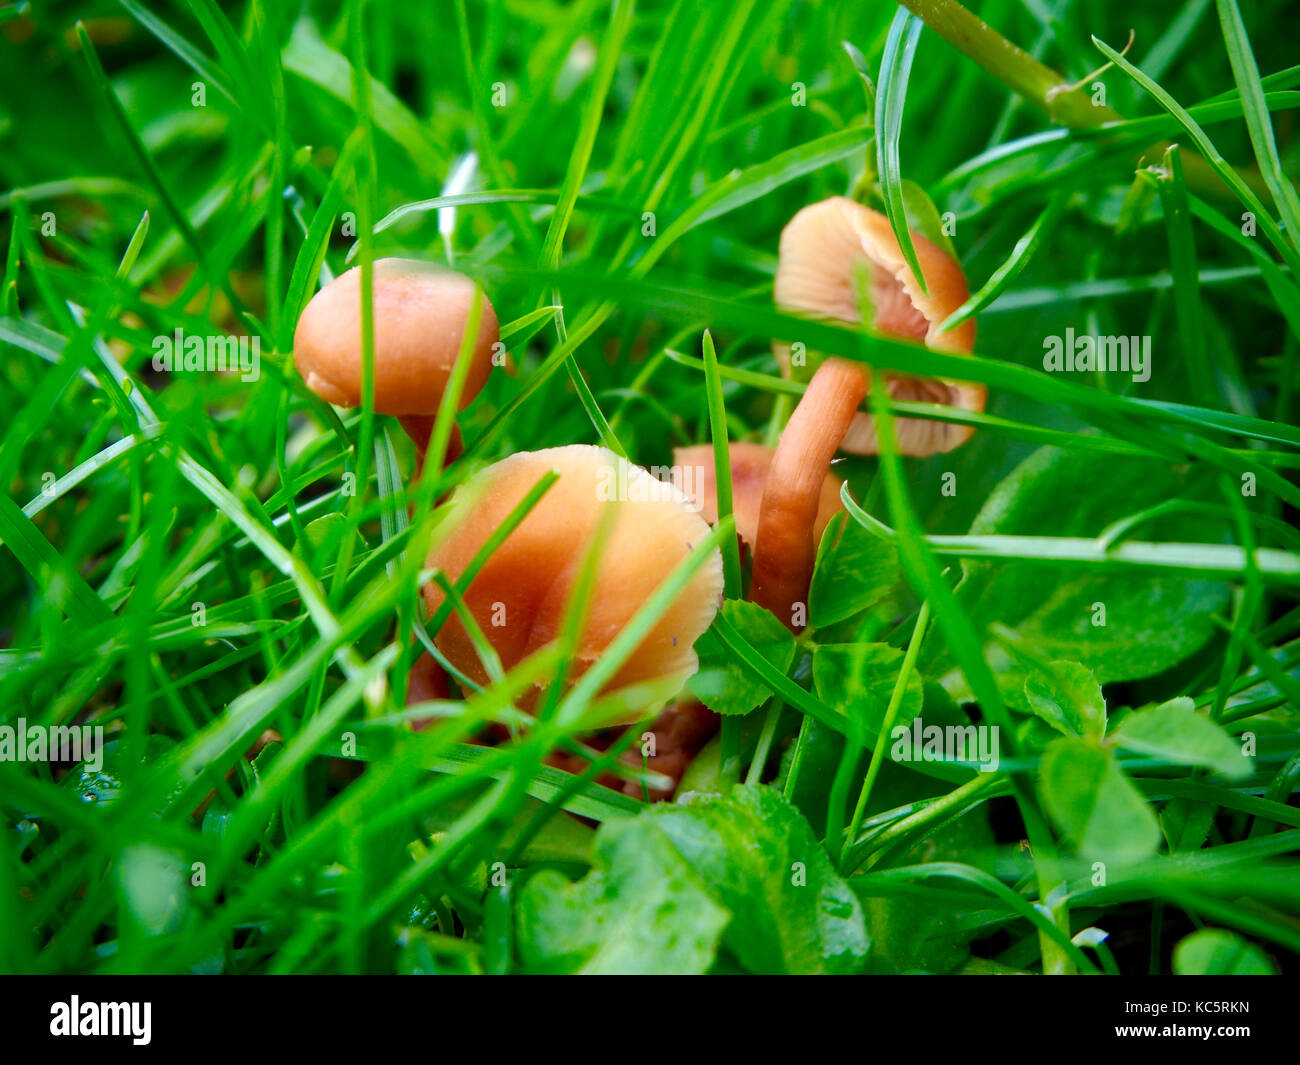 Marasmius oreades mushrooms in the field Stock Photo